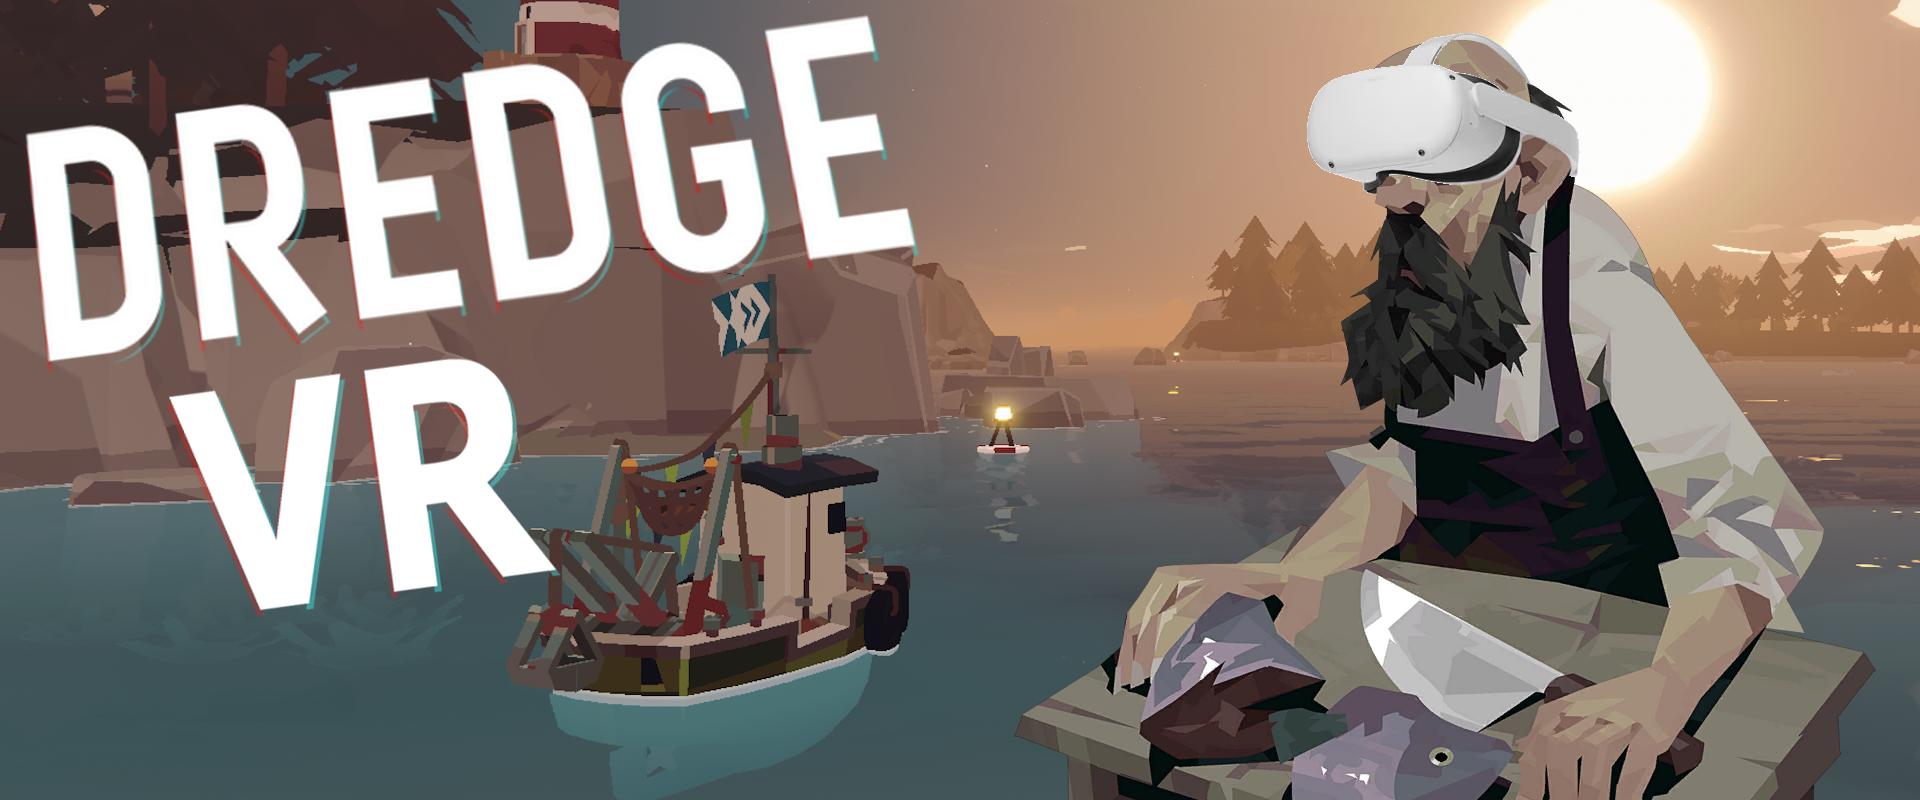 DREDGE VR banner image